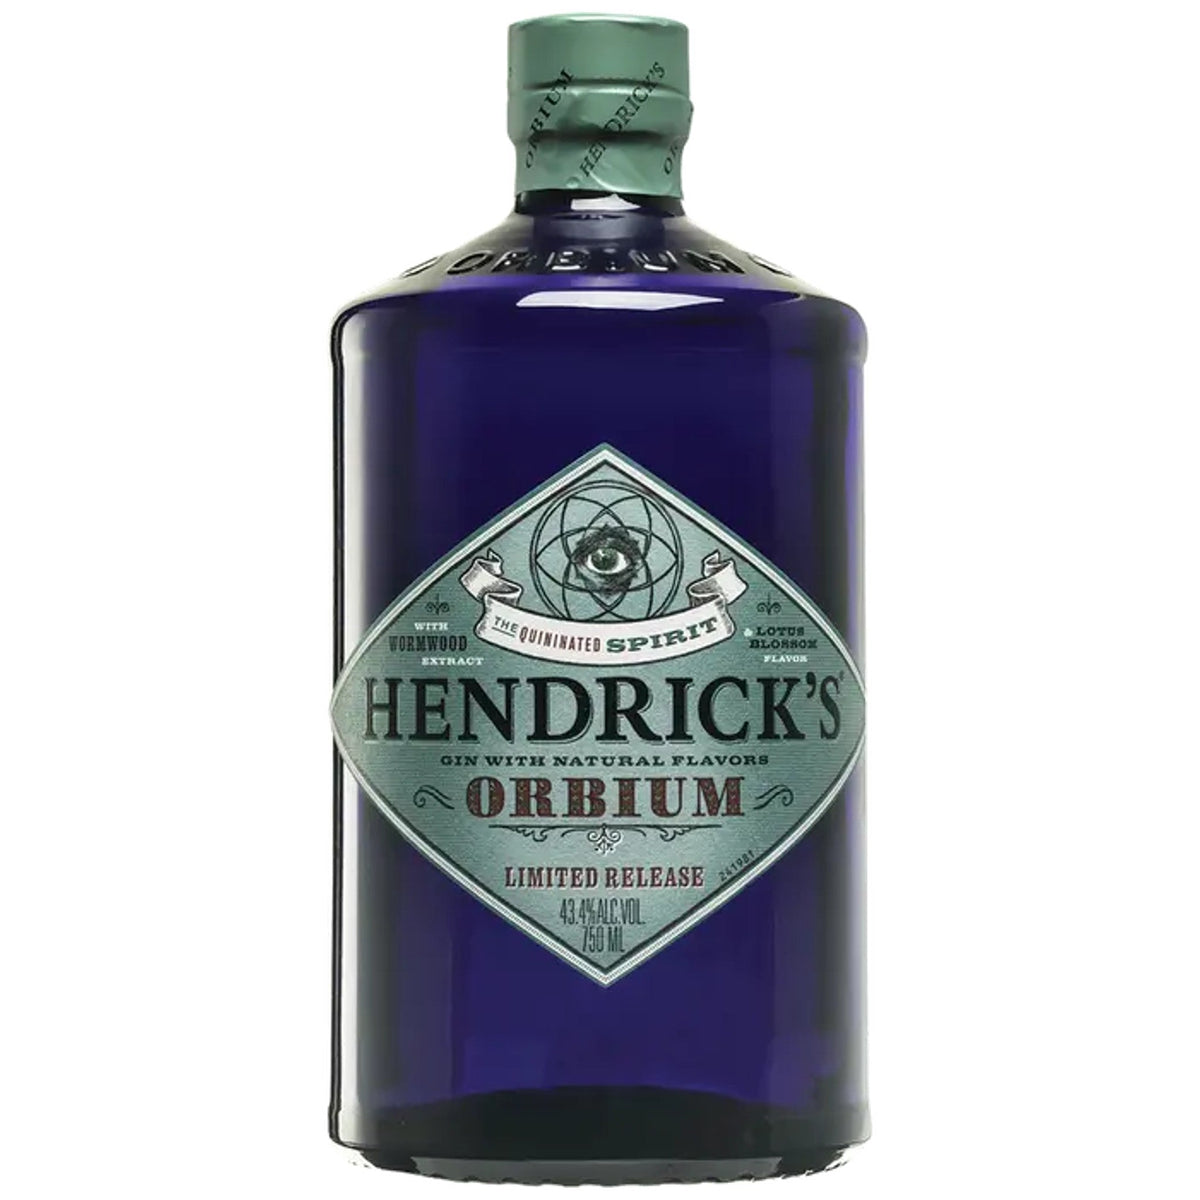 Hendrick's Orbium Limited Release Gin (750ml)